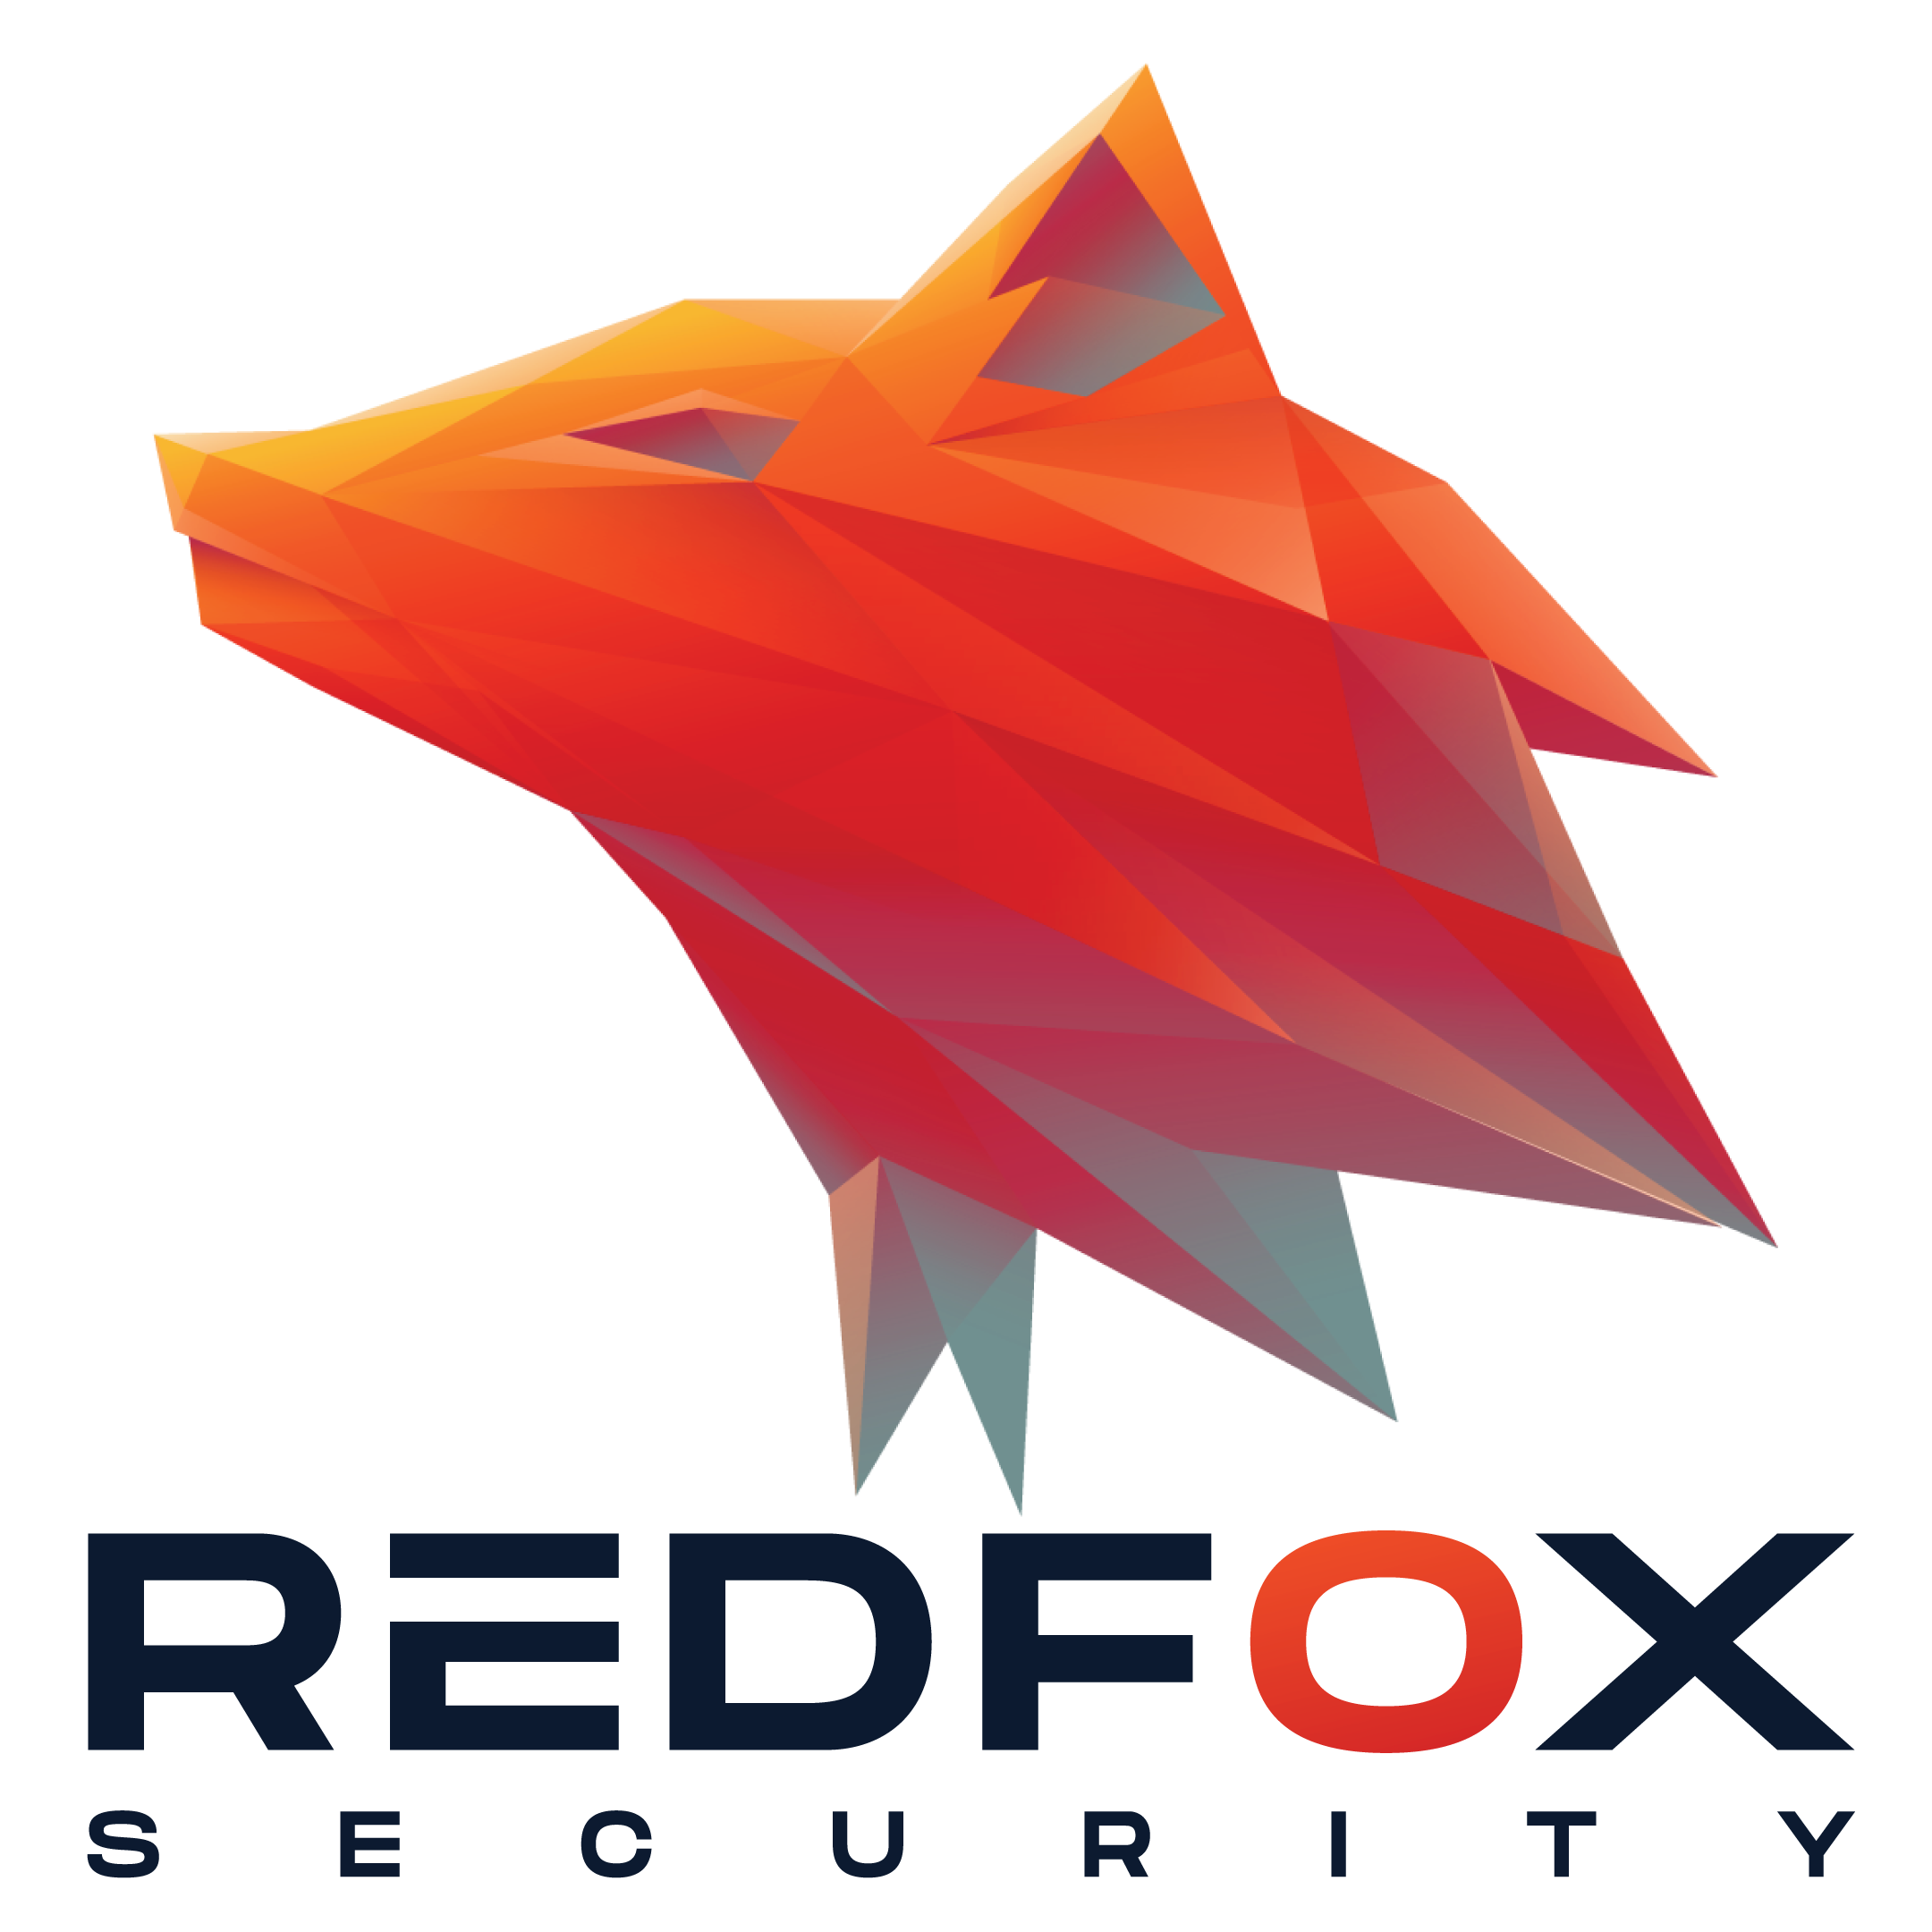 11255 Red Fox Logo Images Stock Photos  Vectors  Shutterstock